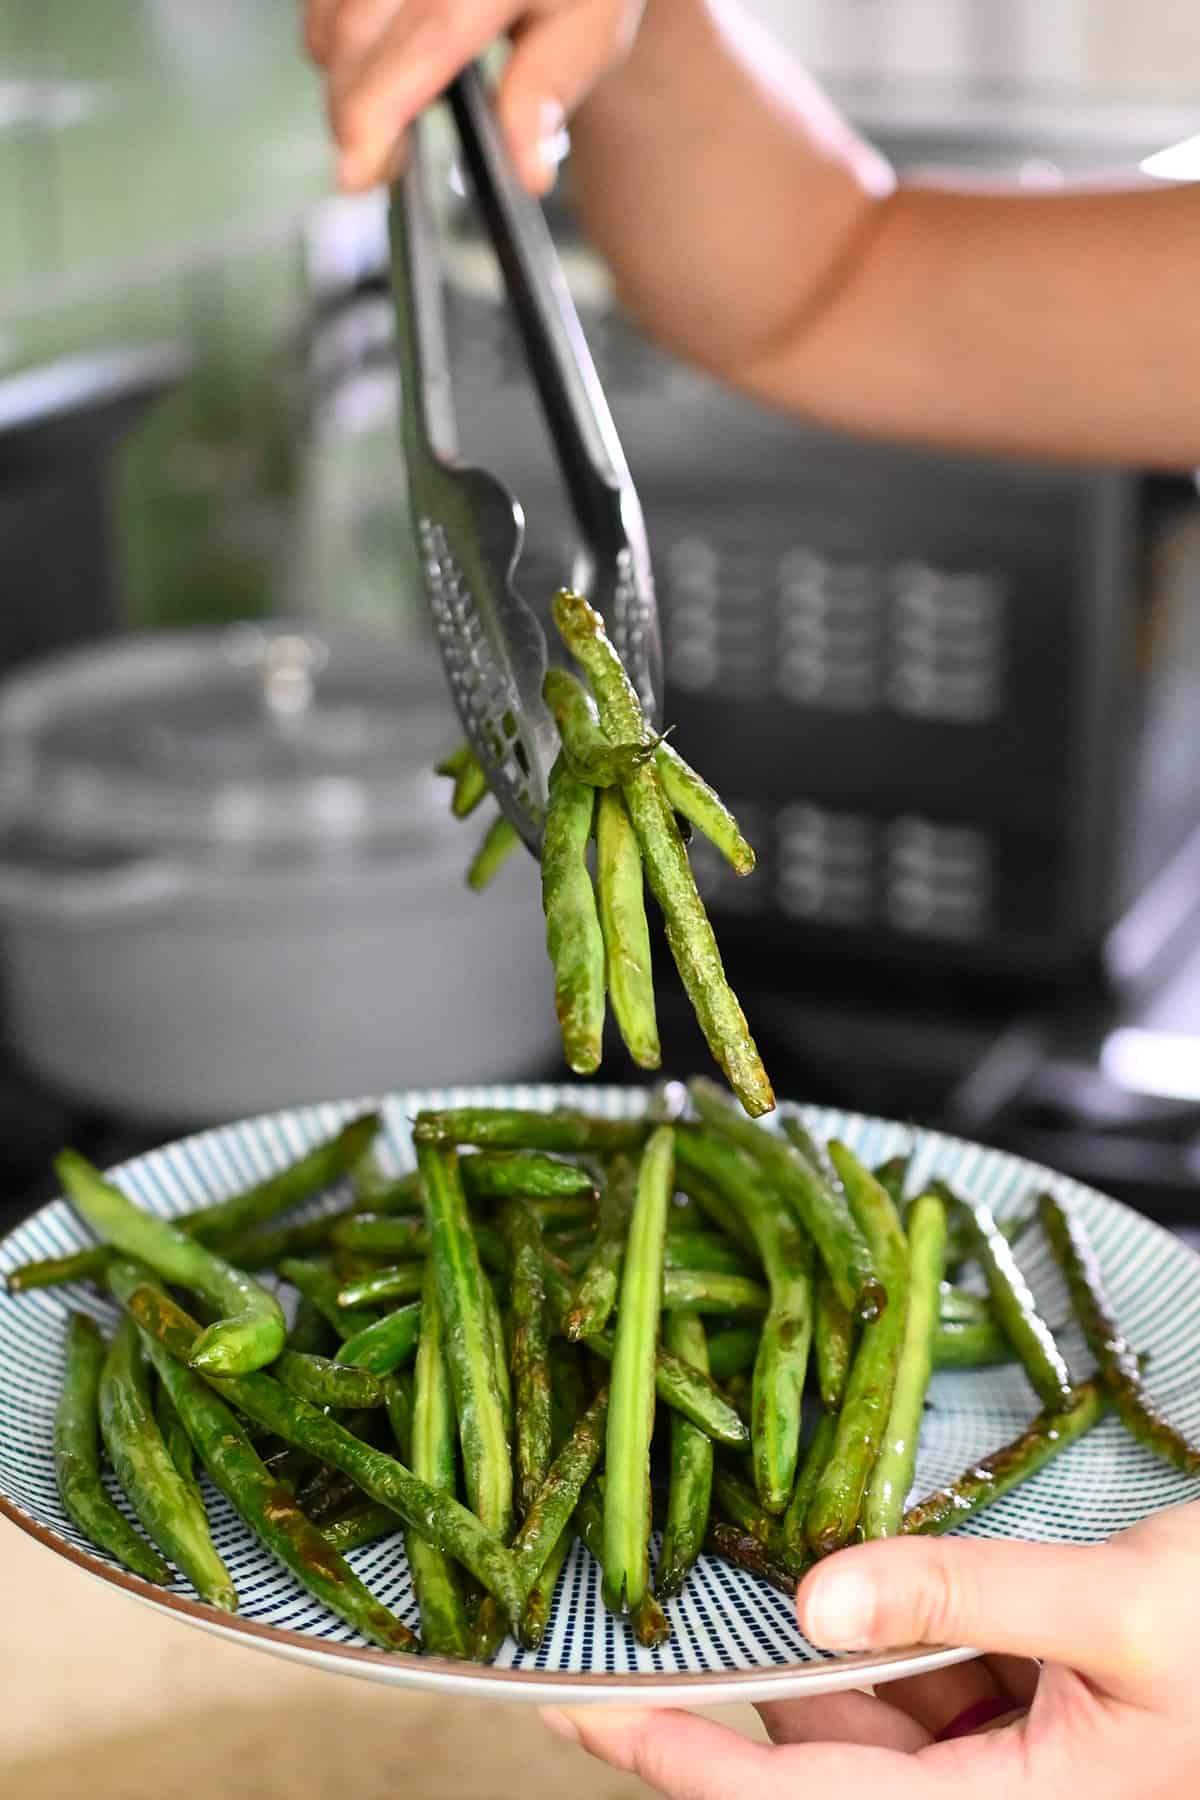 Din Tai Fung Green Beans (air fryer, extra garlic!)